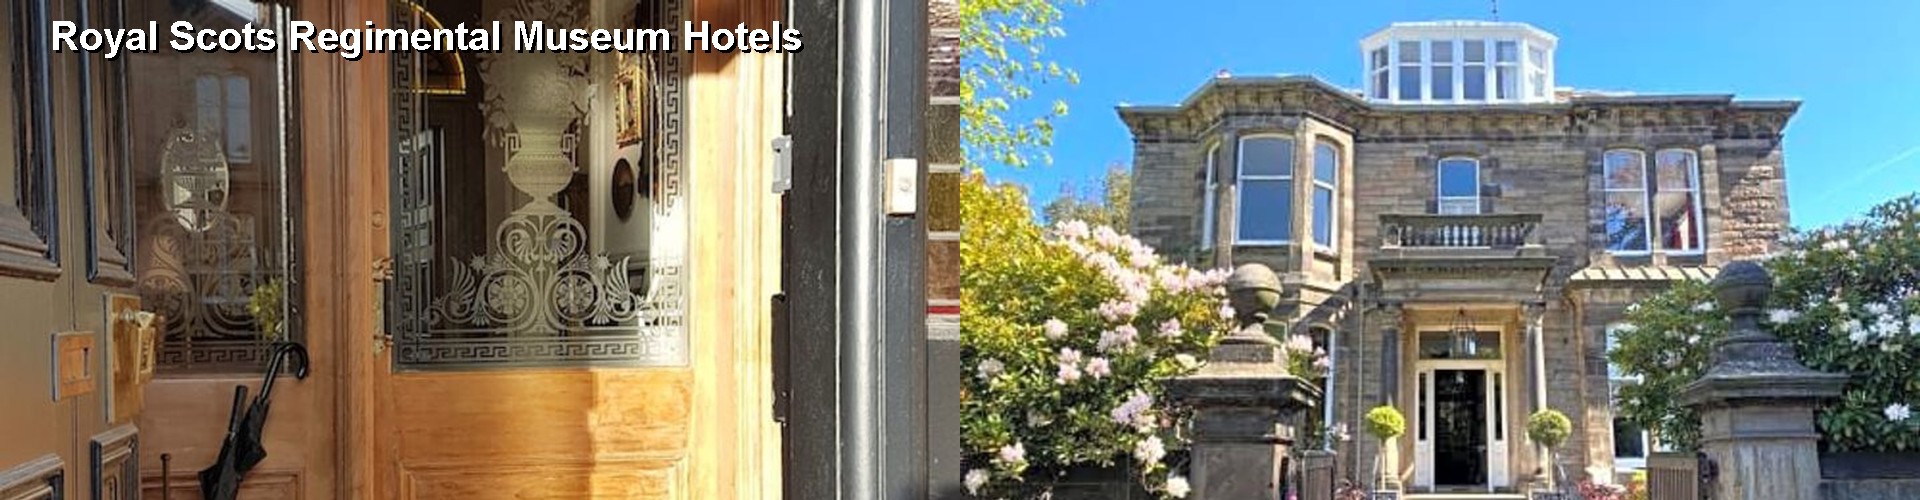 5 Best Hotels near Royal Scots Regimental Museum